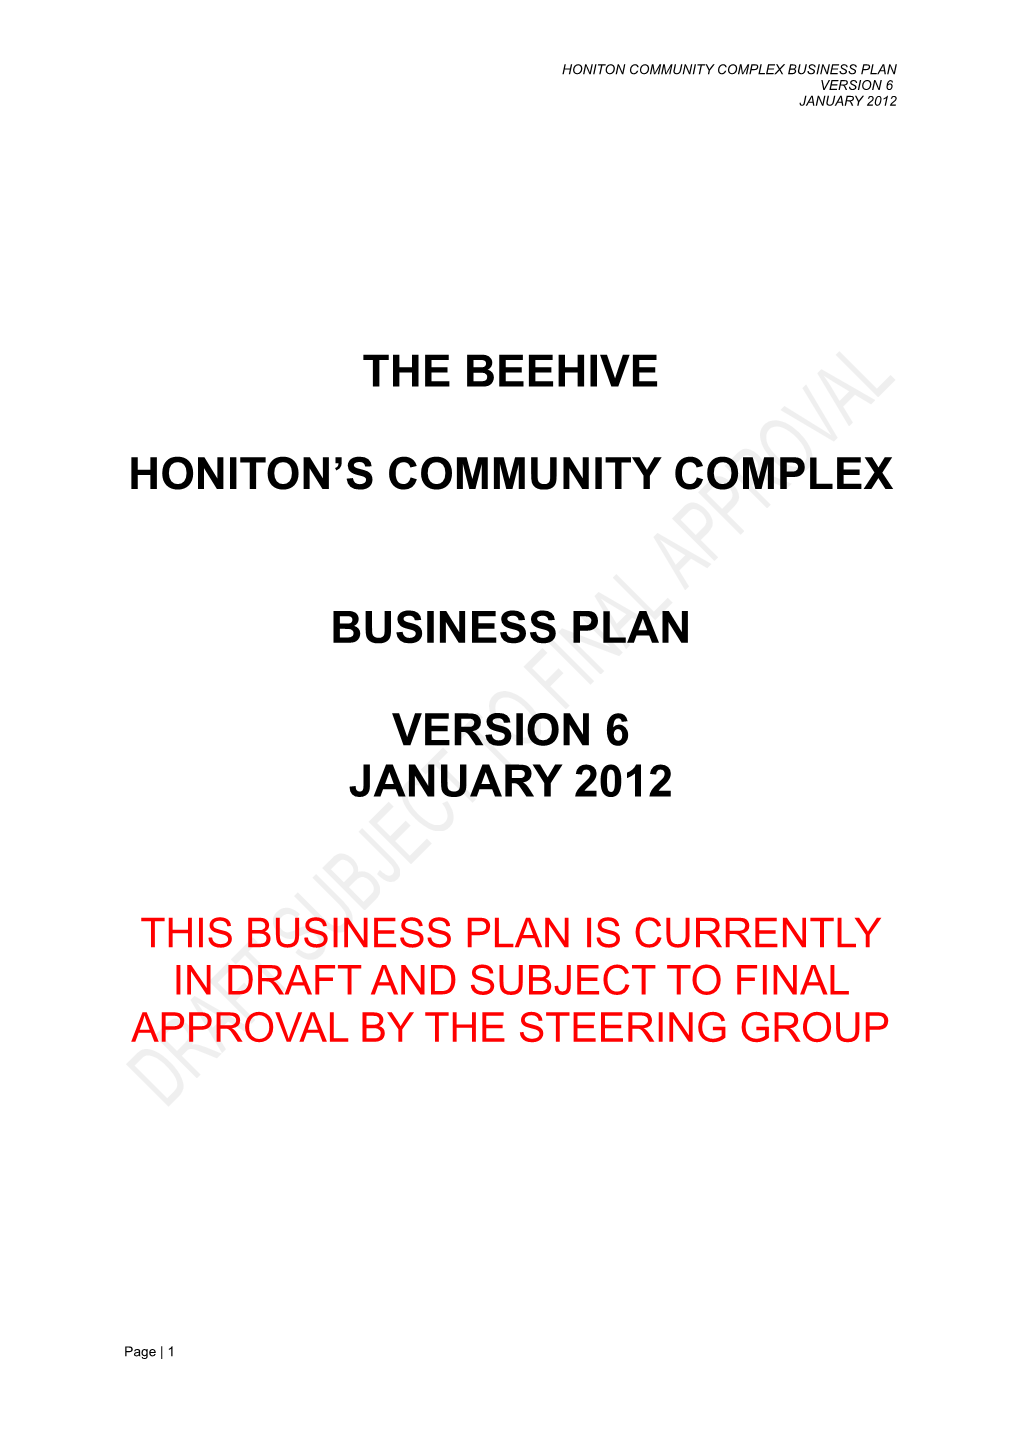 Honiton Community Complex Business Plan Version 6